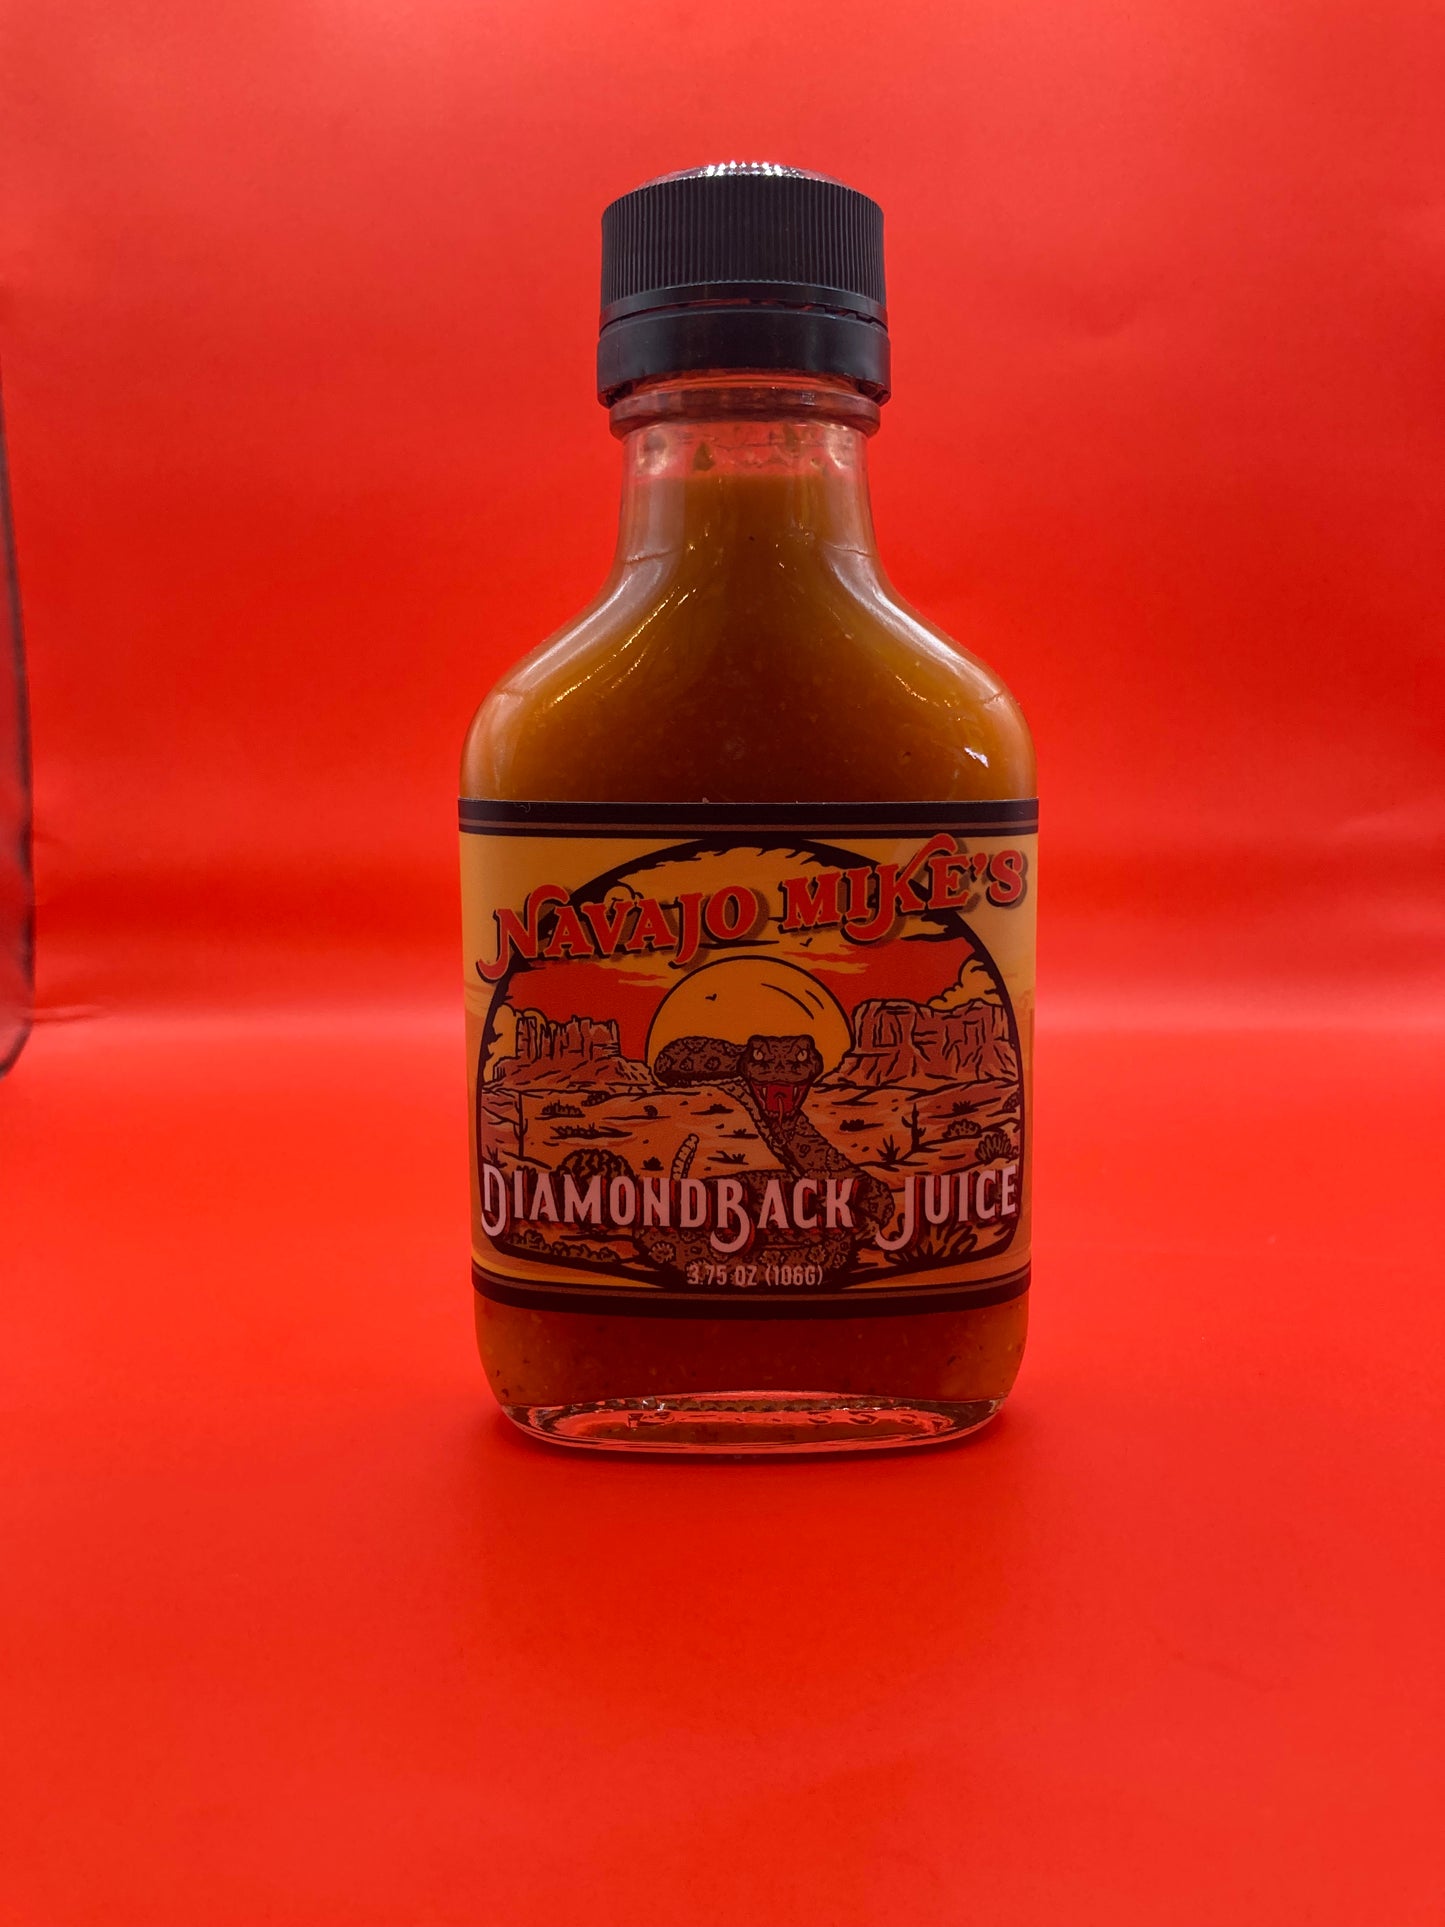 Navajo Mike's Diamondback Juice Hot Sauce